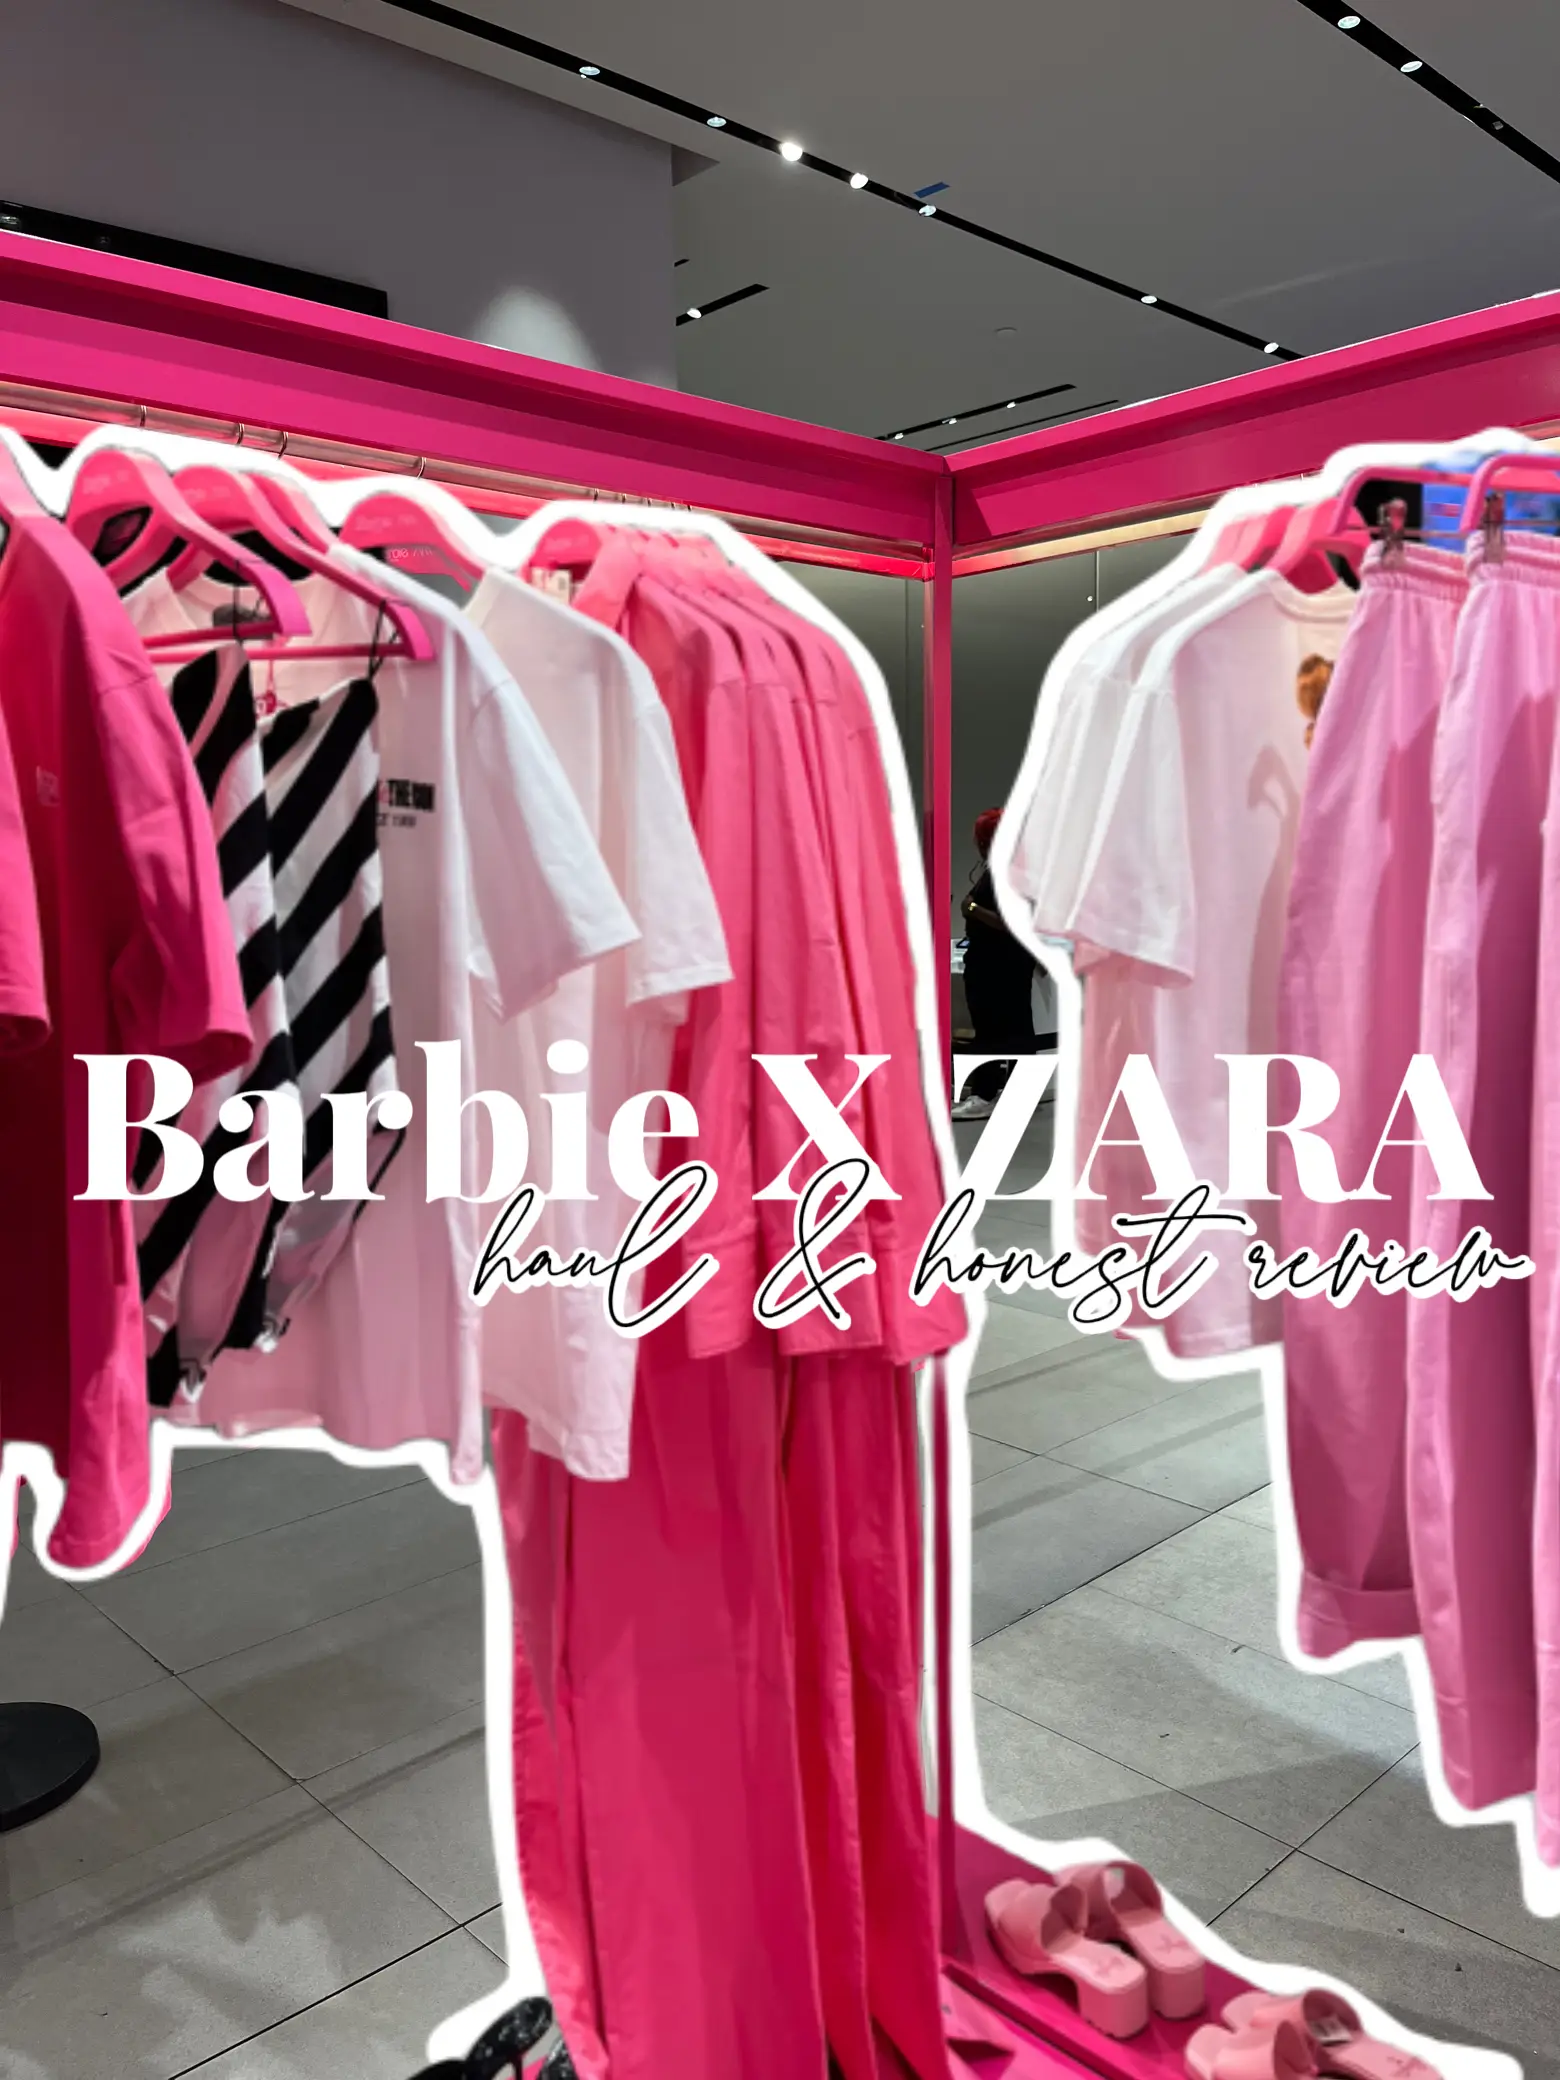 ZARA Hot pink barbie villain deep v-neck bodysuit Size XS - $25 - From Lydia